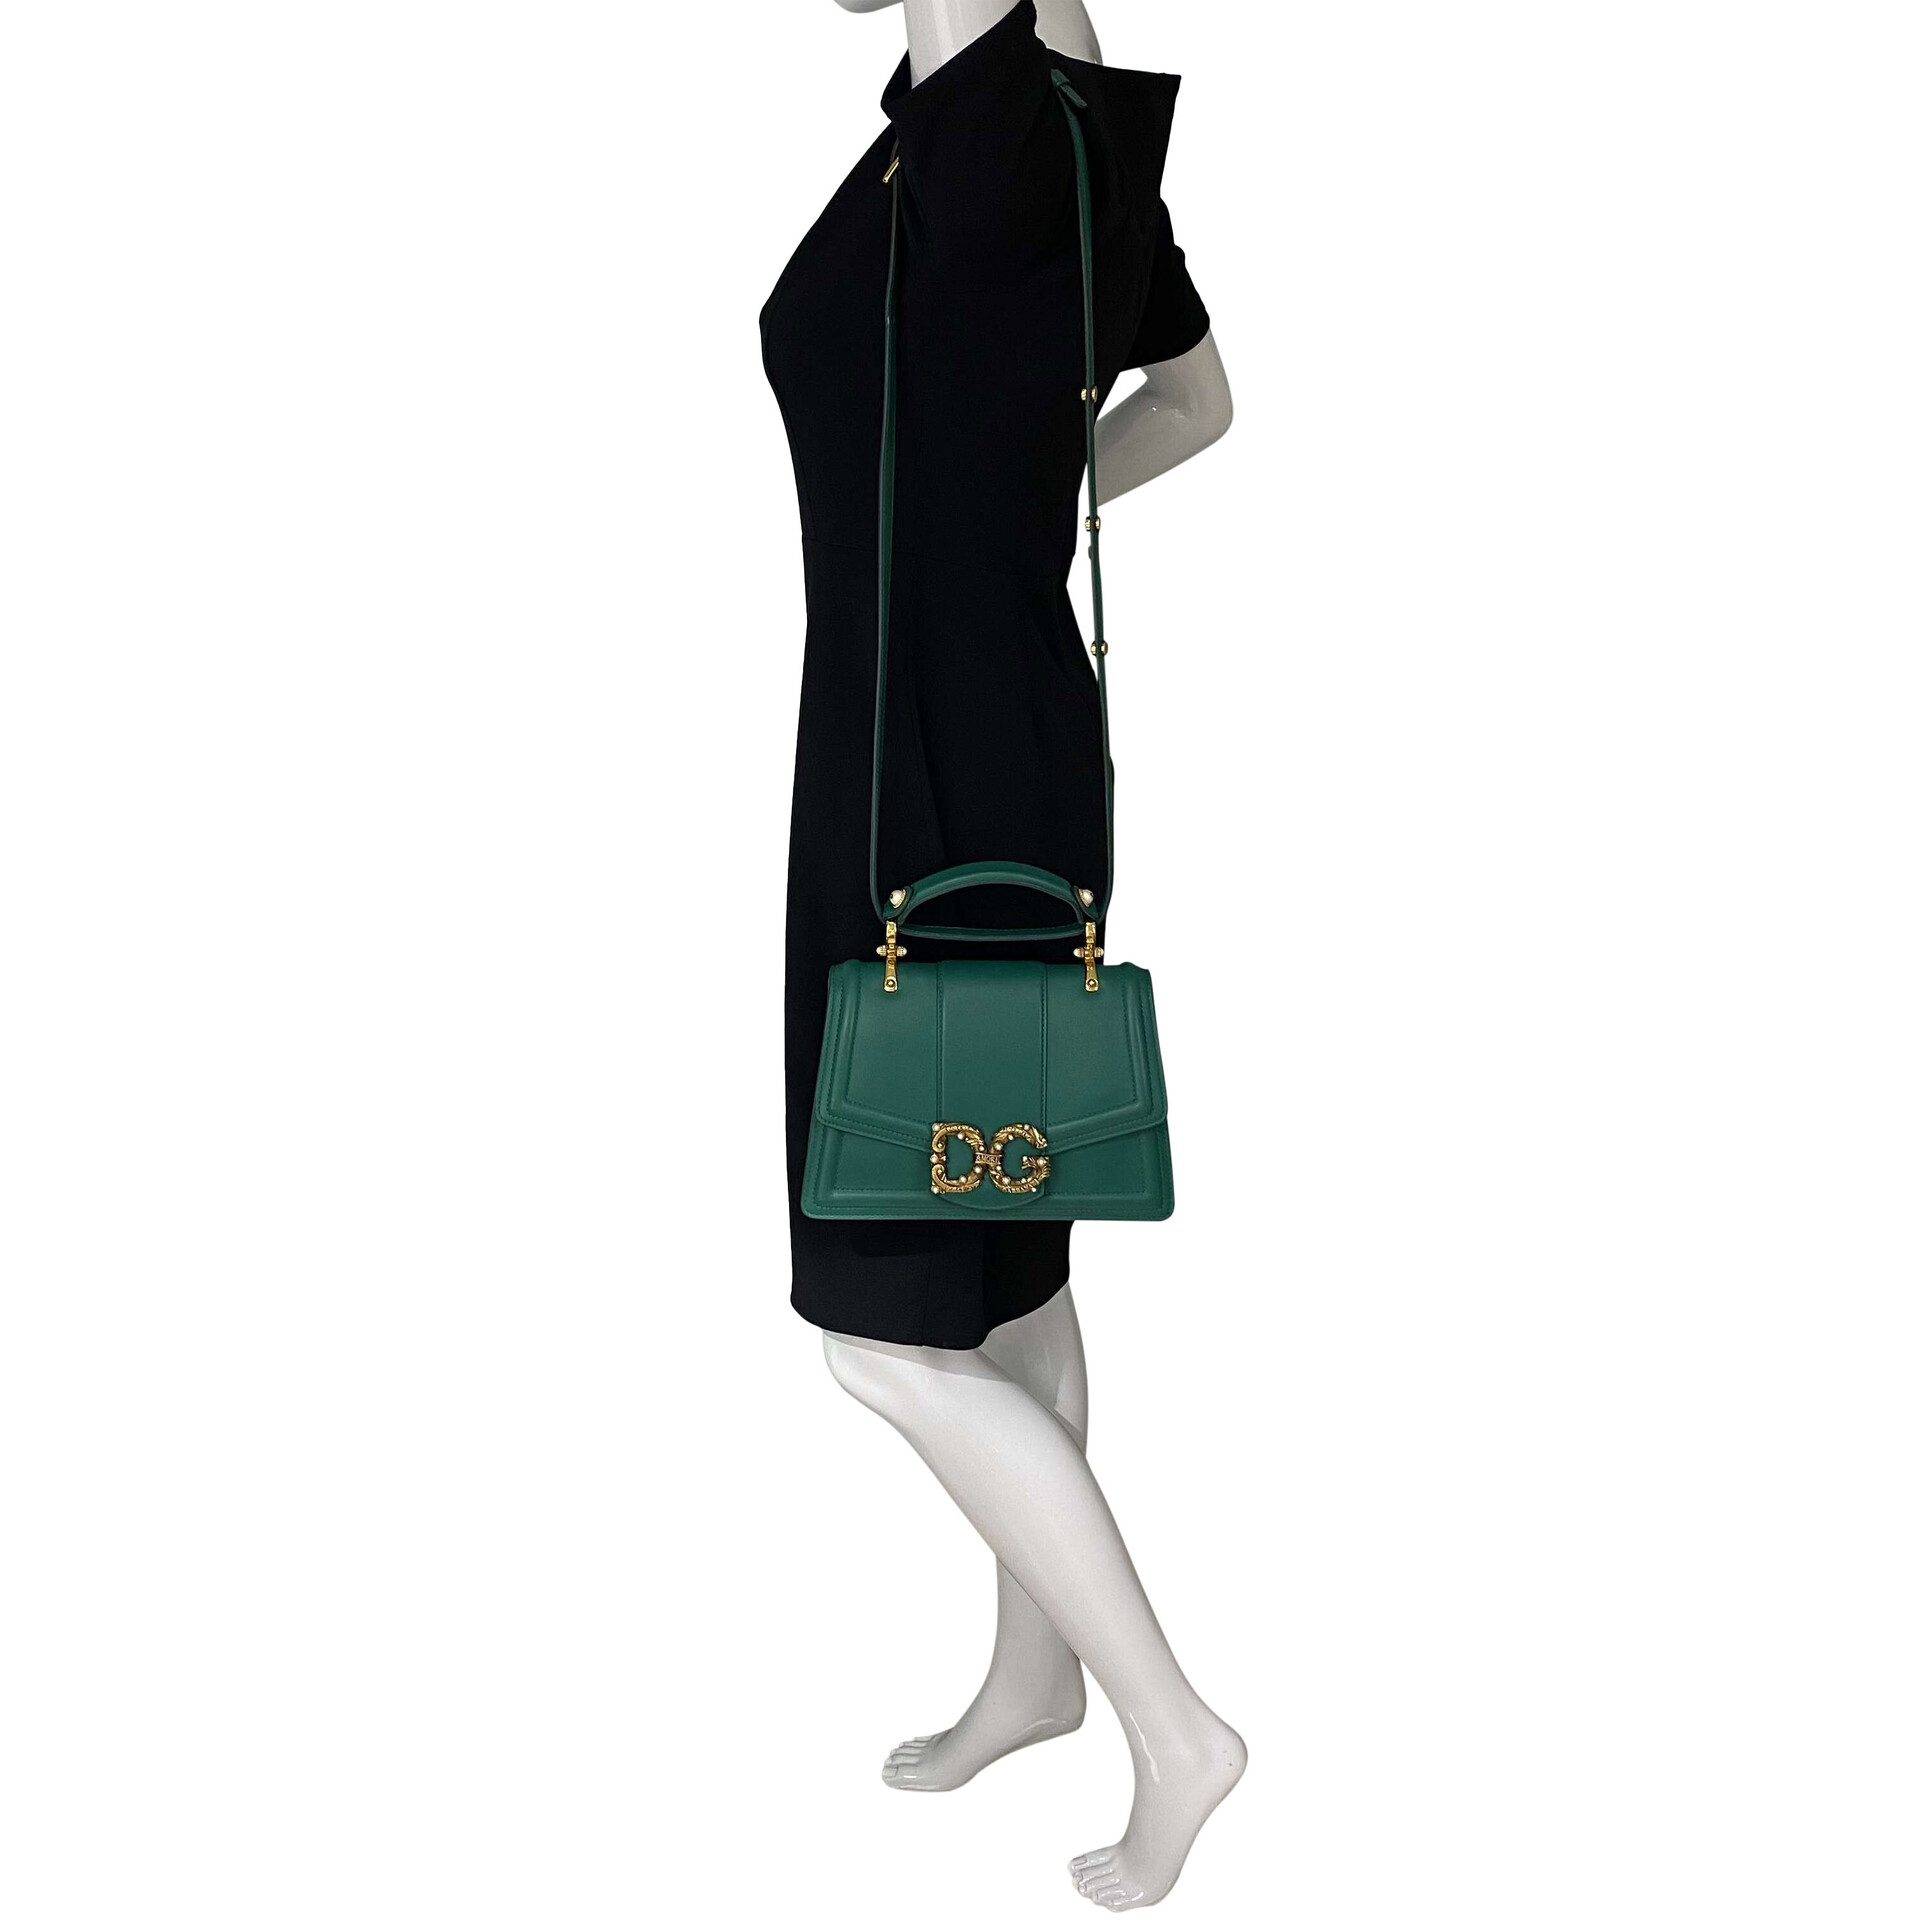 Bolsa Dolce & Gabbana DG Amore Verde